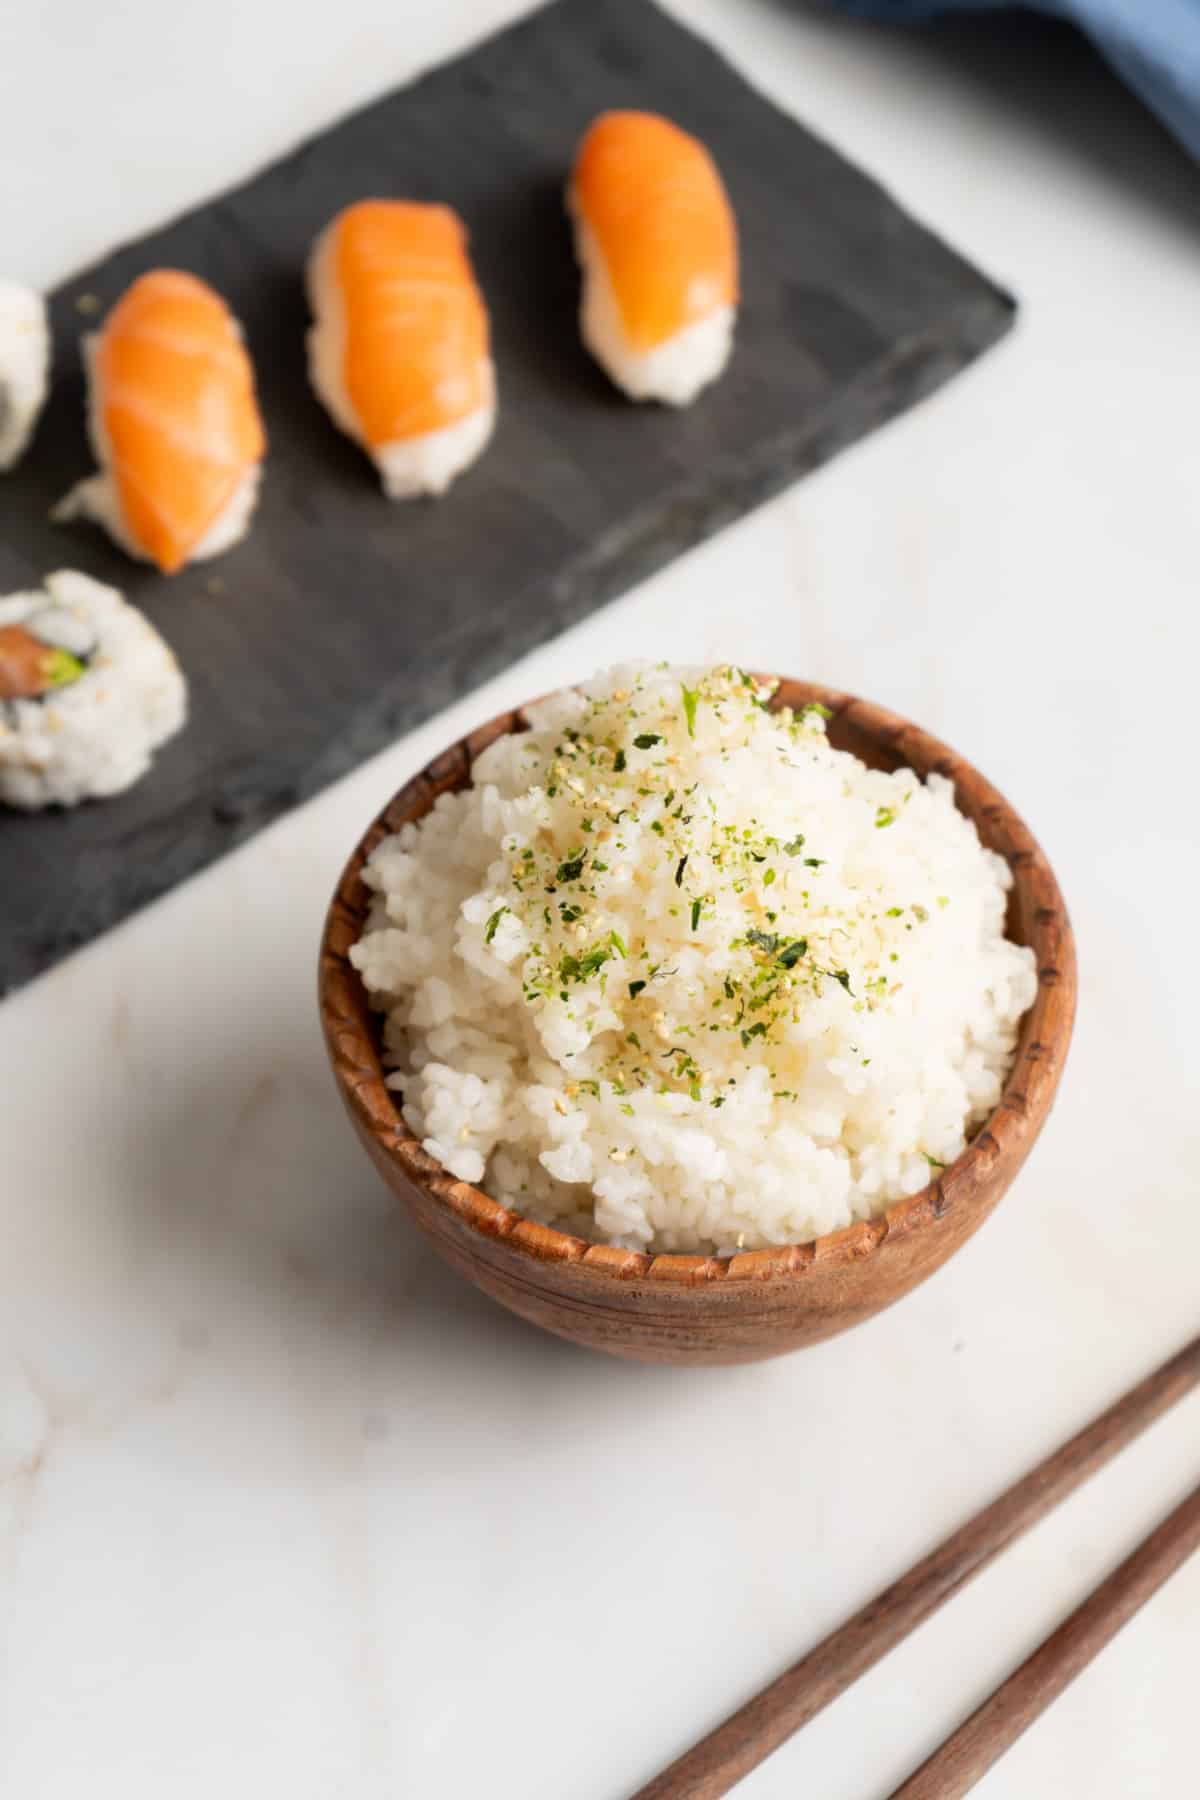 Sushi rice in a wood bowl with furikake seasoning and a plate of nigiri.